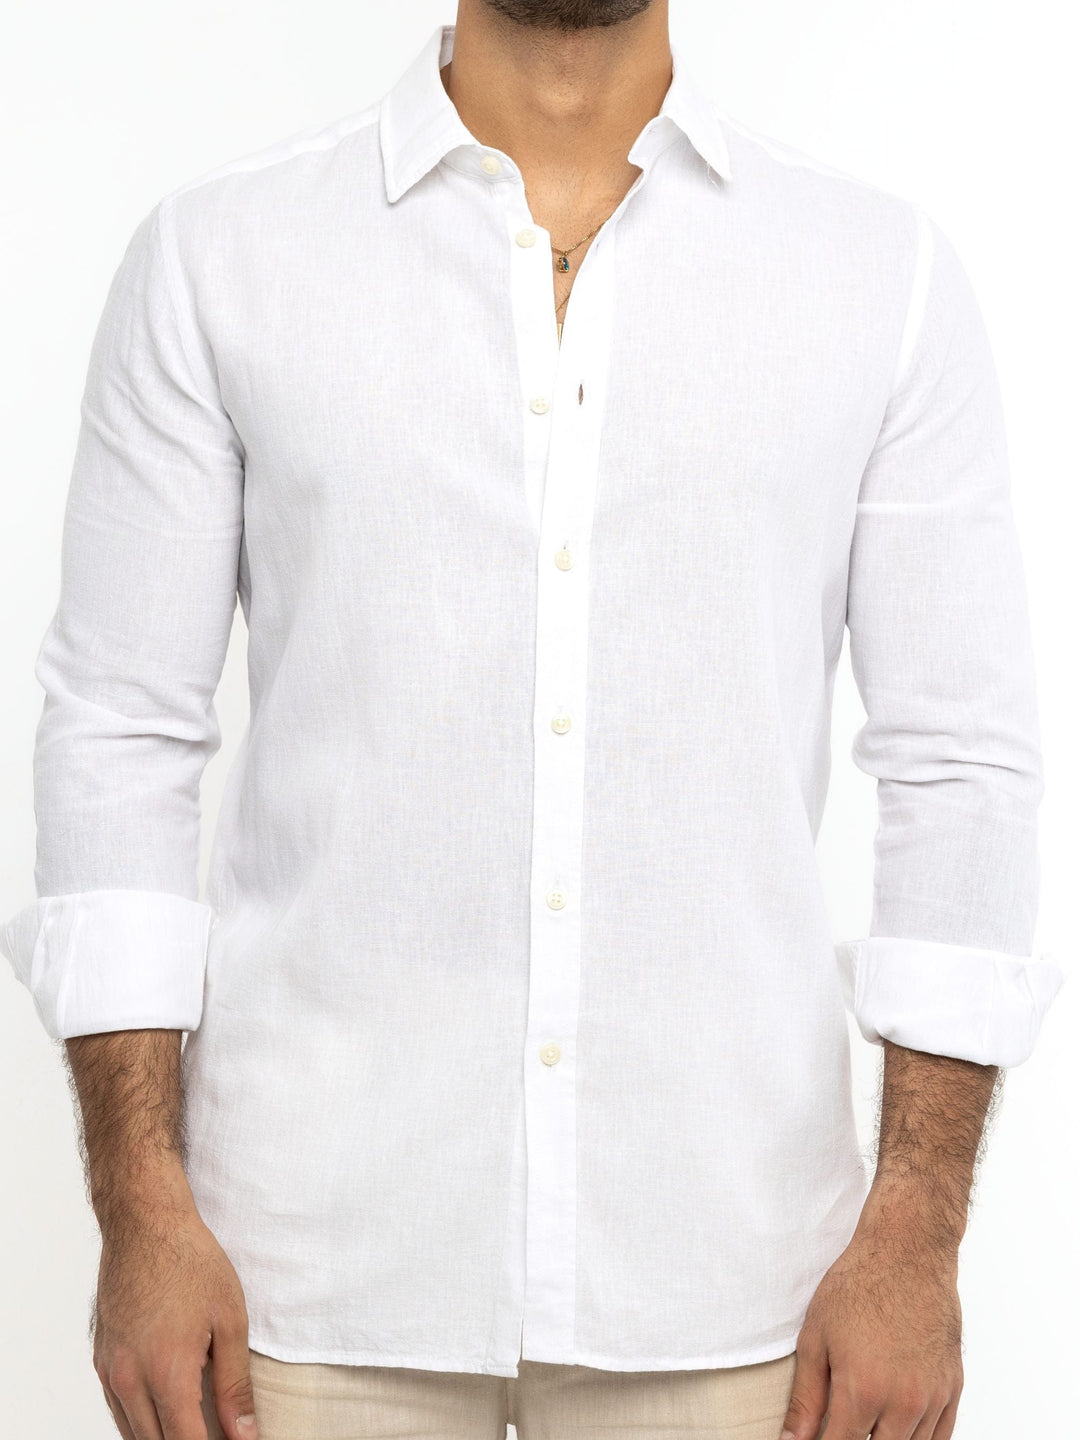 Zhivago x Nuuk Men Linen Shirt White Linen Shirt